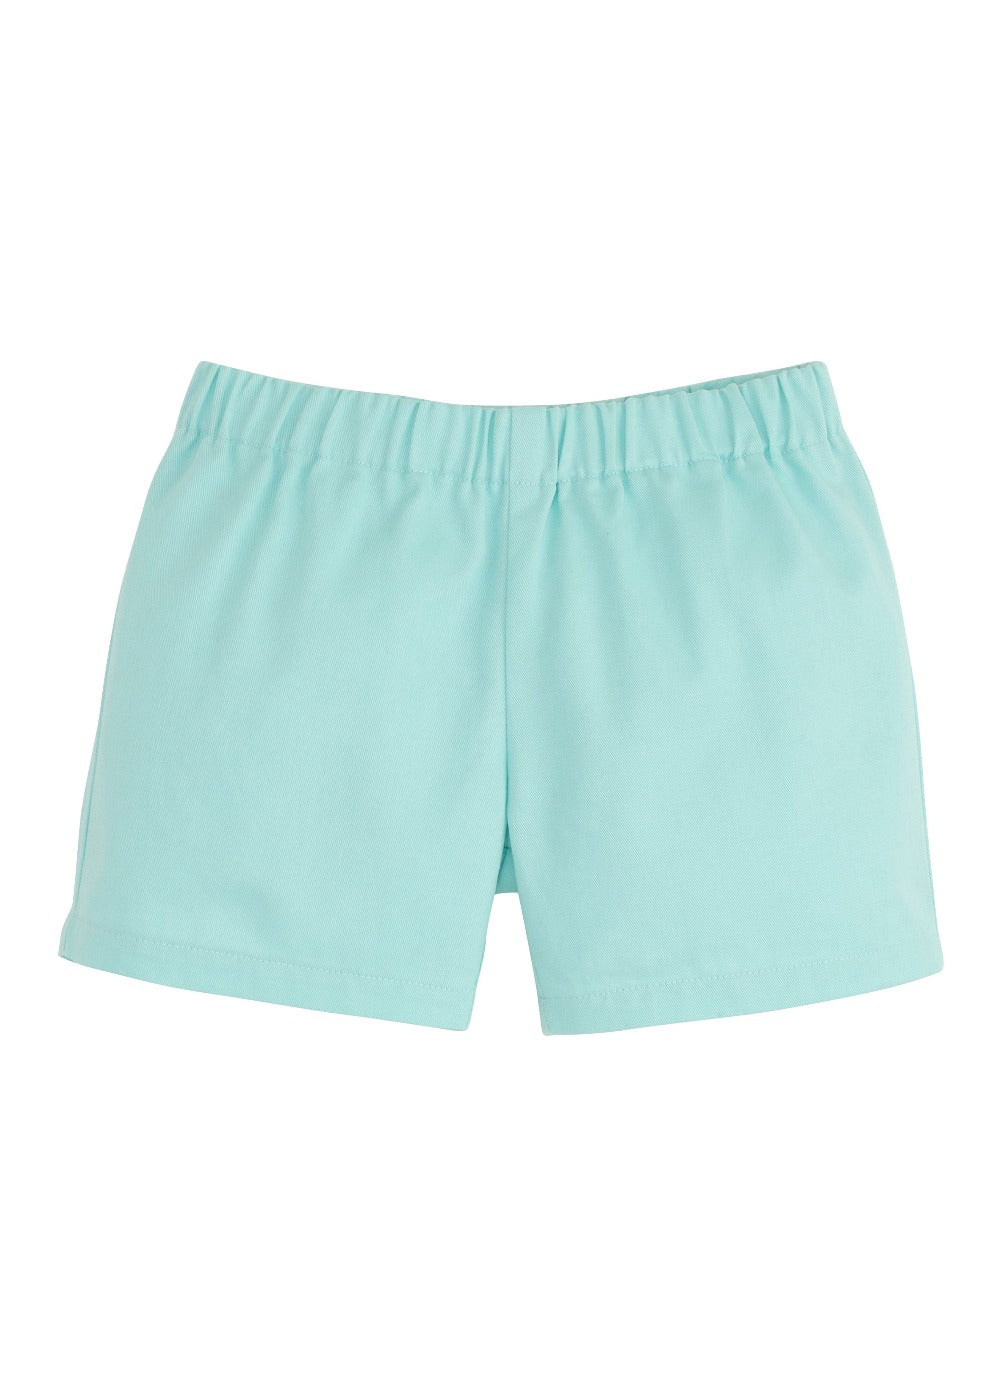 seguridadindustrialcr classic aqua twill shorts with elastic waist 